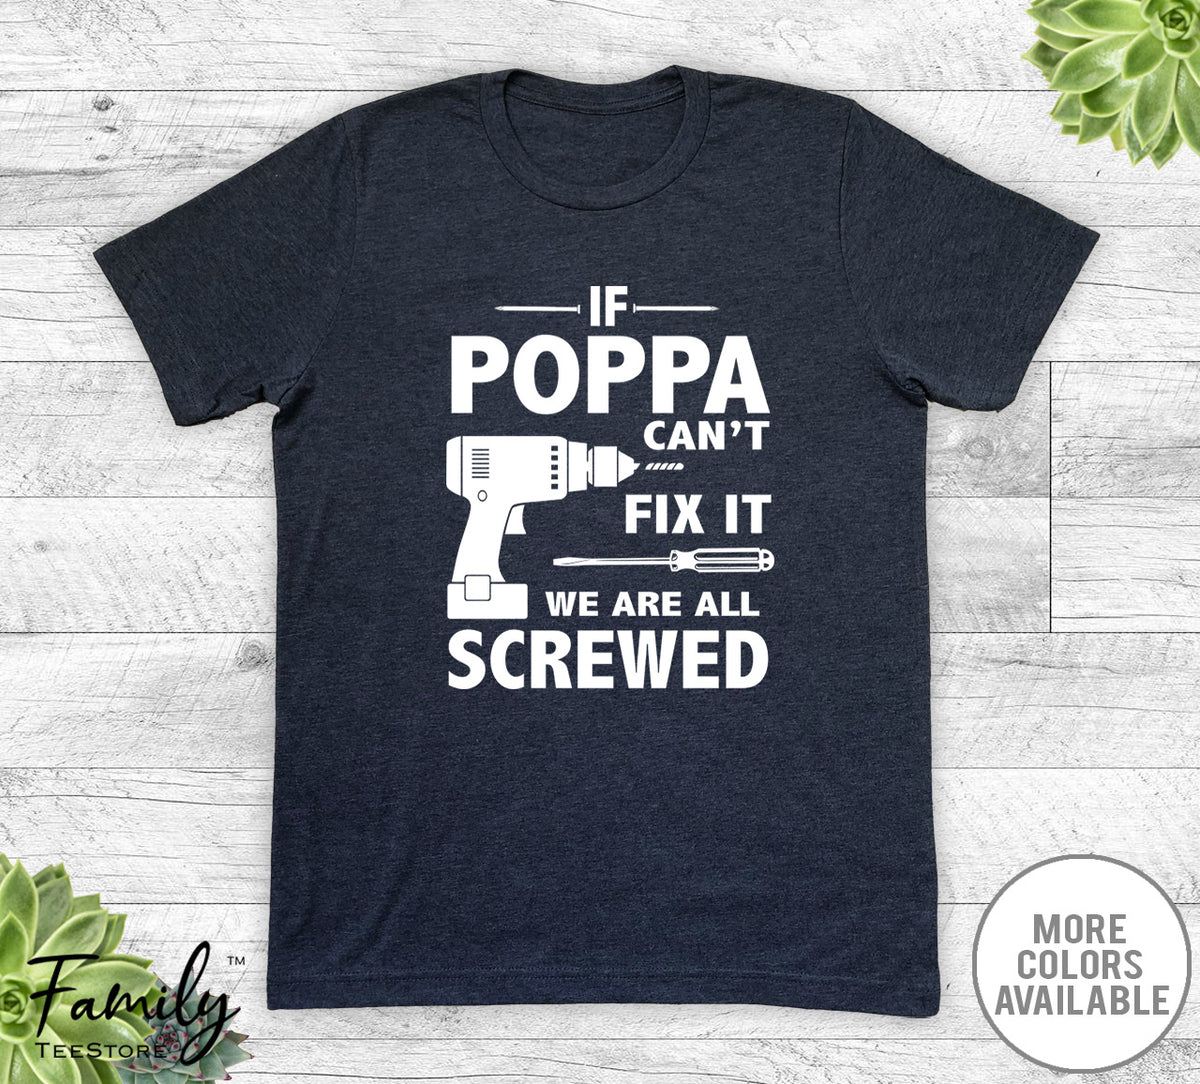 If Poppa Can't Fix It We Are All Screwed - Unisex T-shirt - Poppa Shirt - Poppa Gift